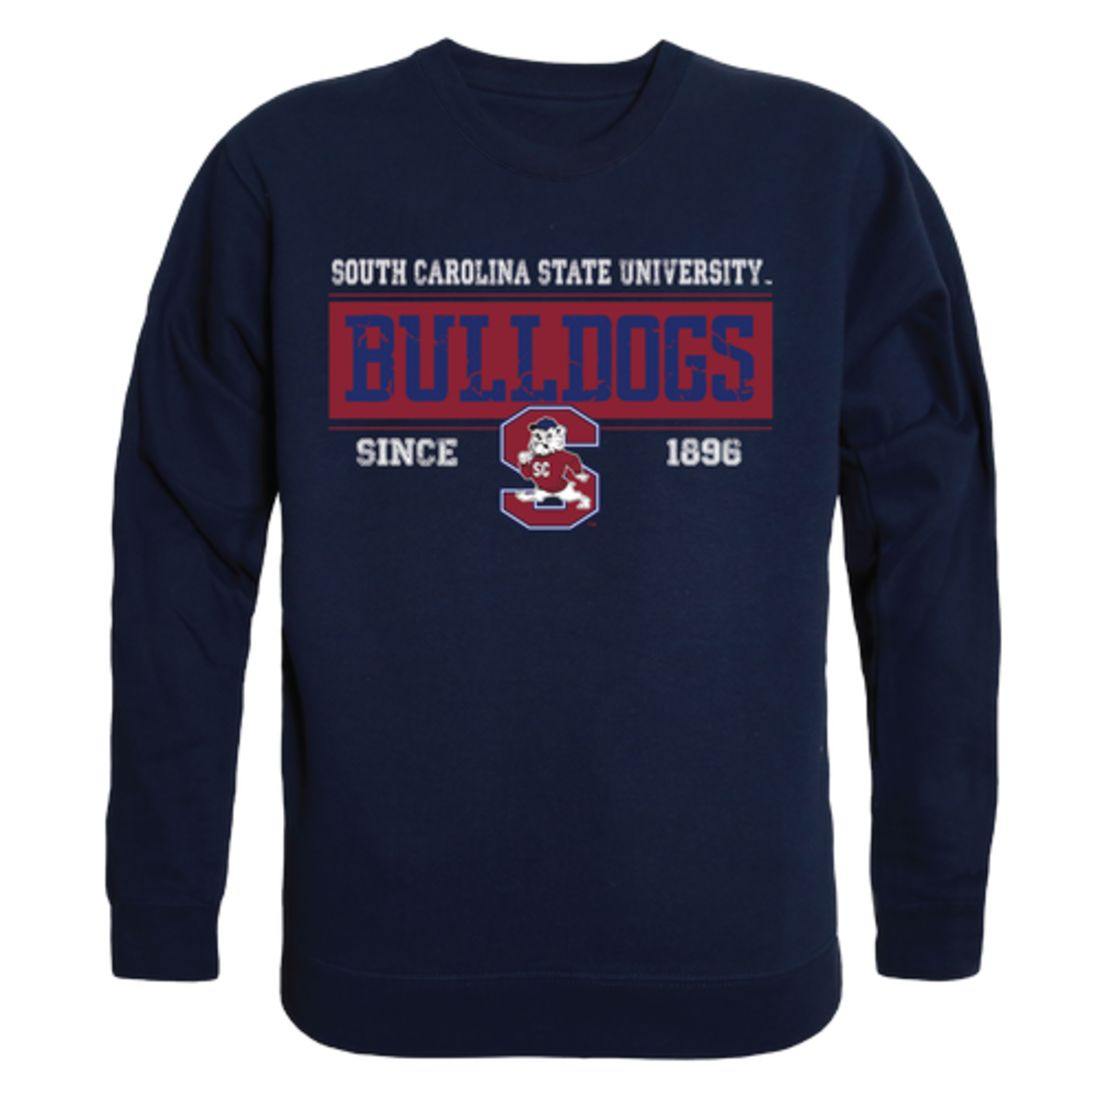 South Carolina State University Bulldogs Established Crewneck Pullover Sweatshirt Sweater Navy-Campus-Wardrobe